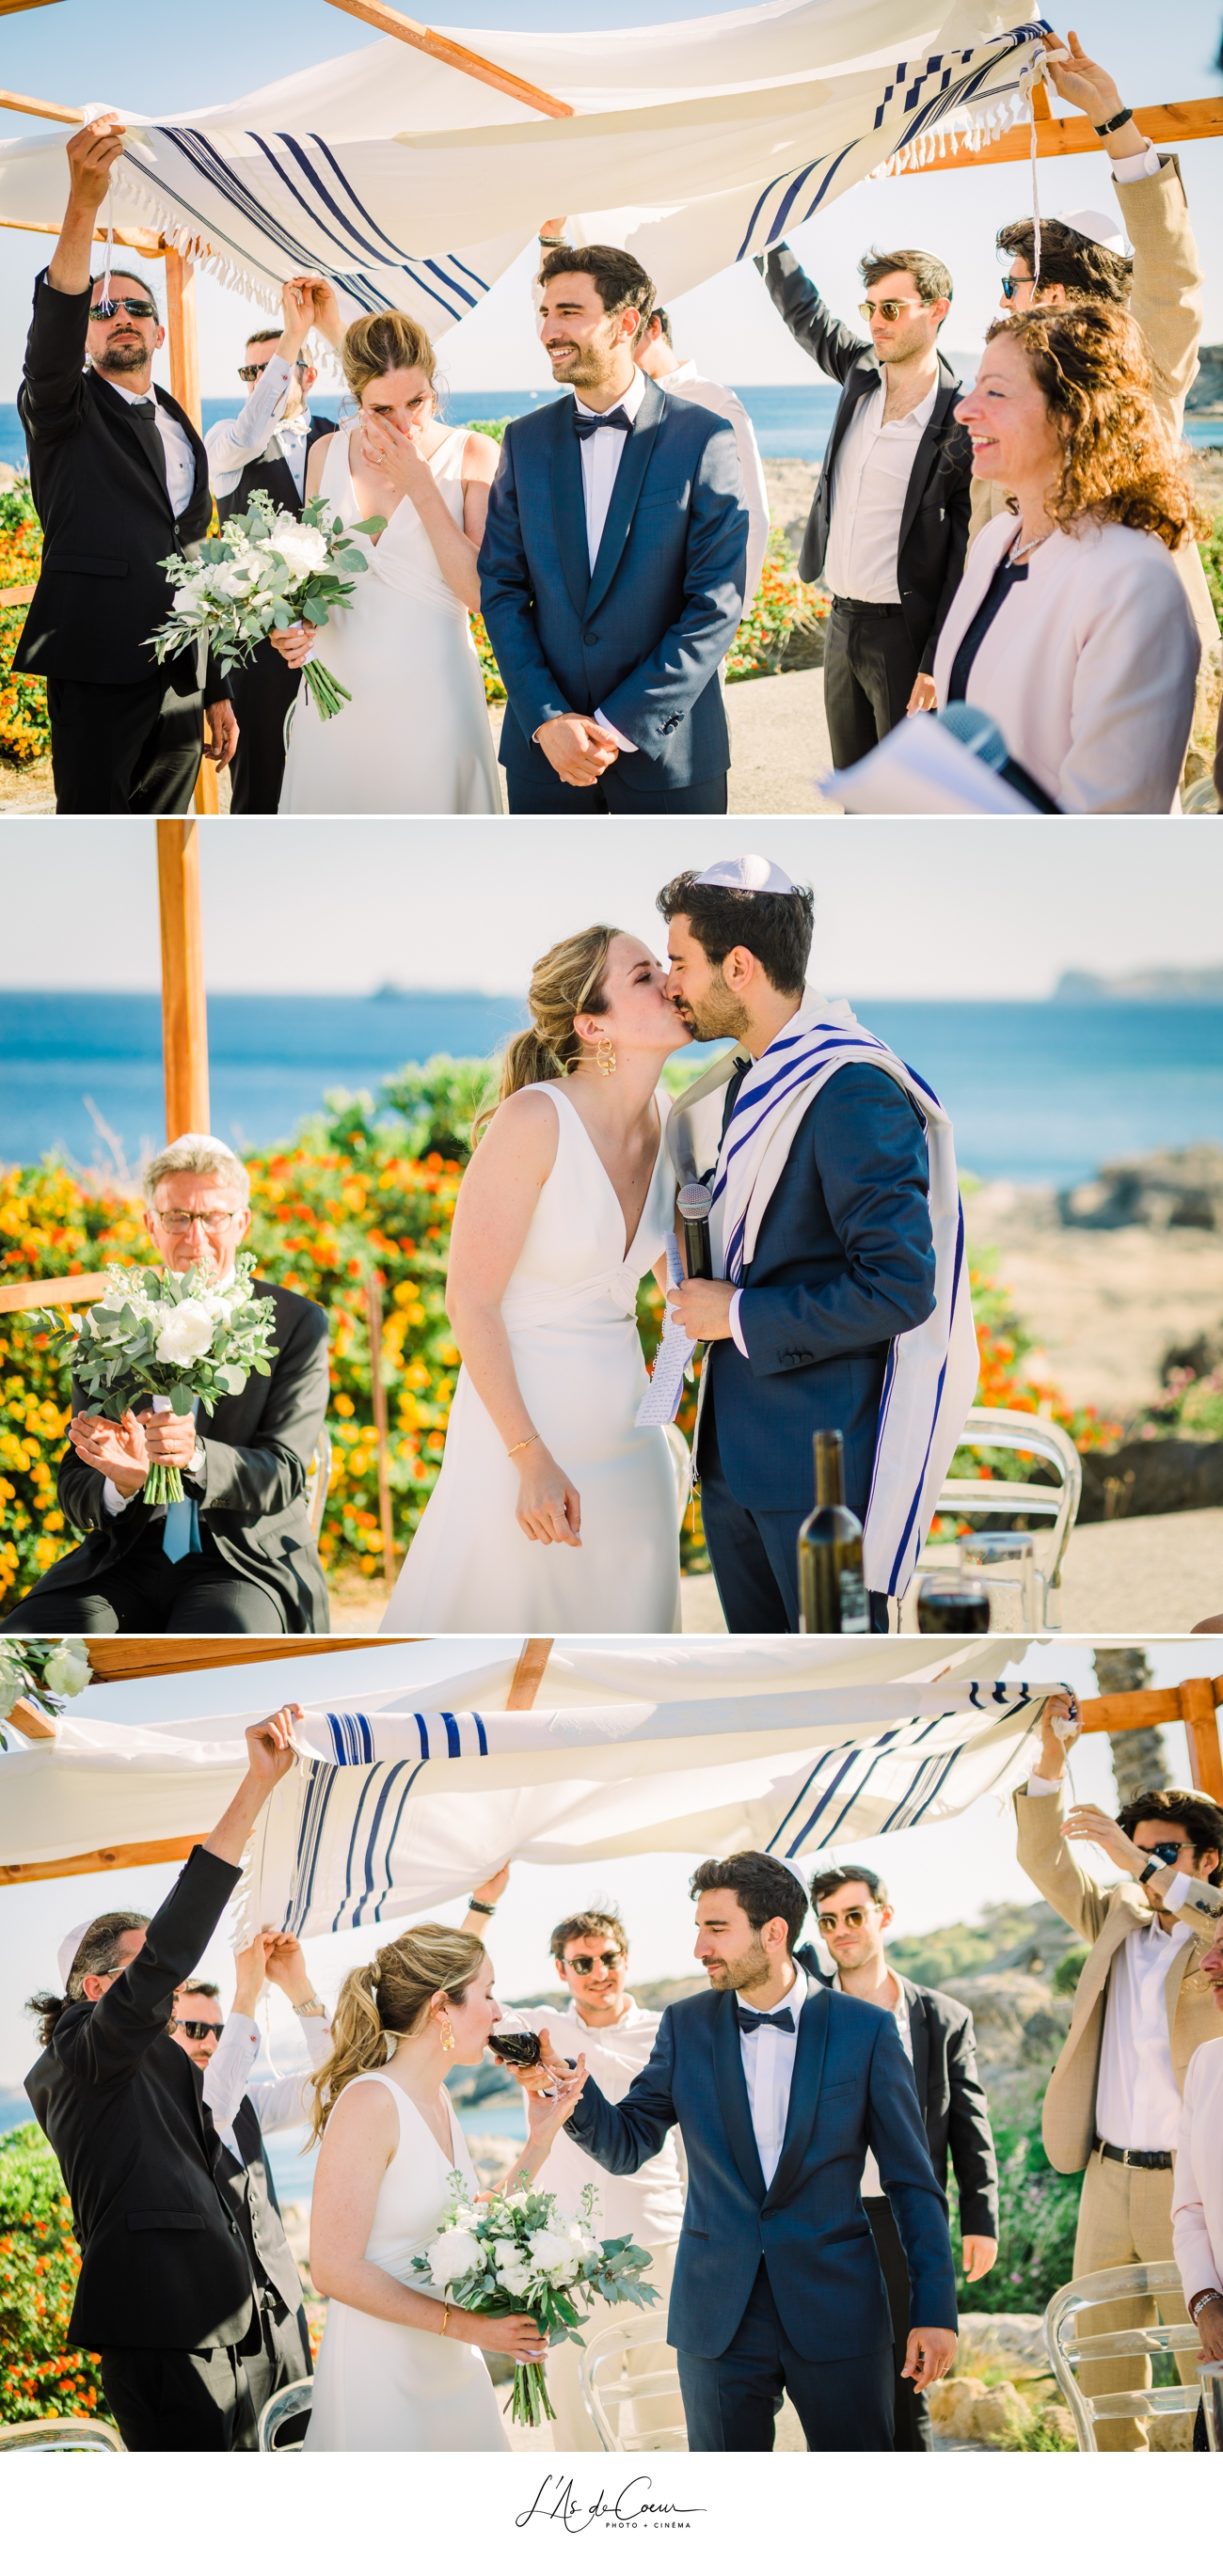 Photographe mariage grece - wedding photographer greece cérémonie juive houppa